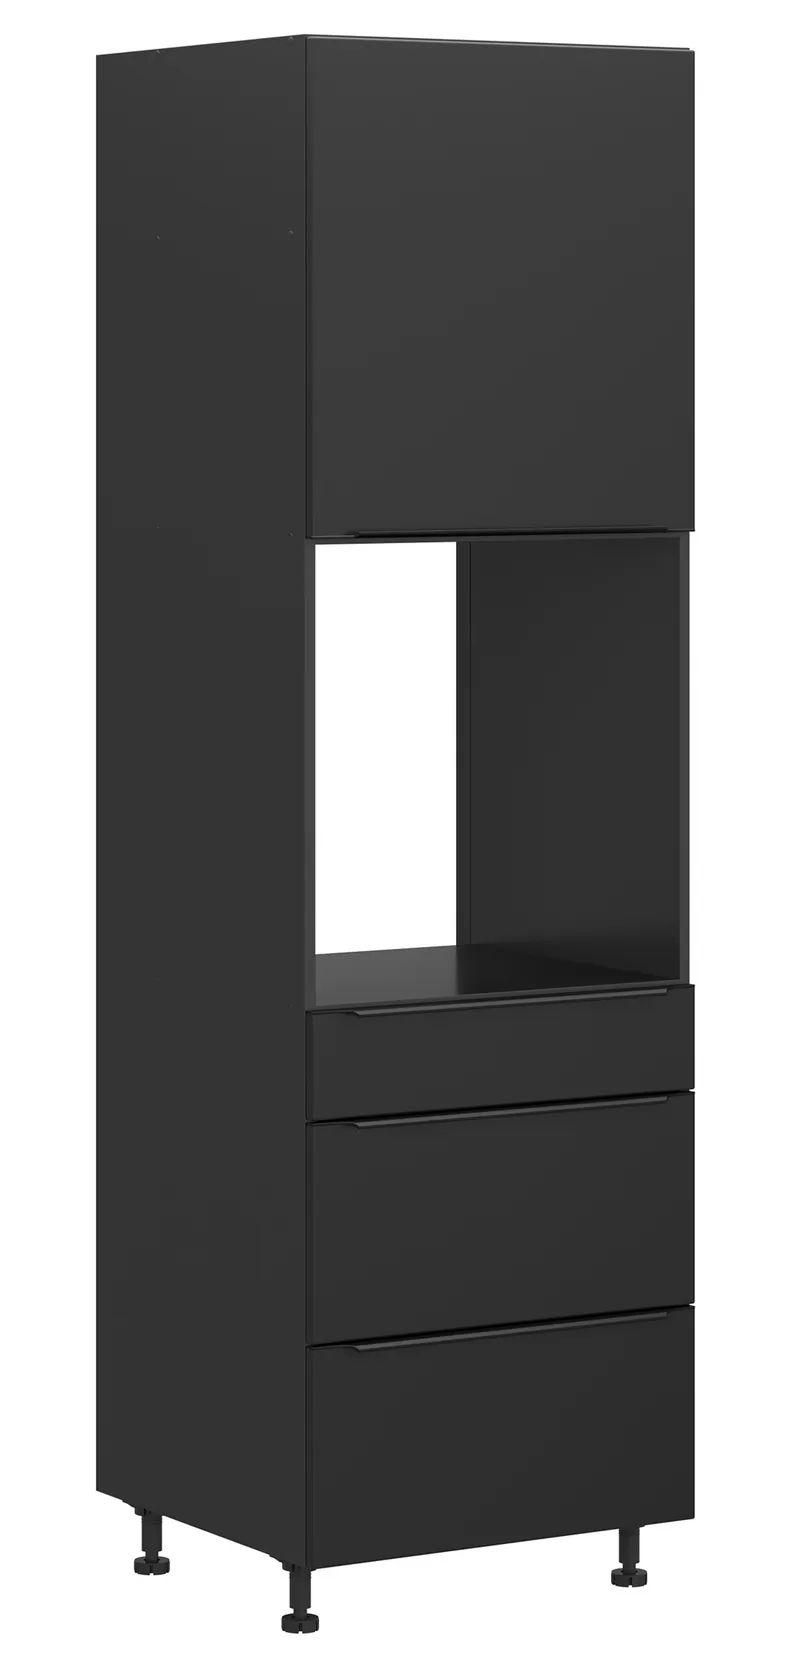 BRW Кухонный шкаф для духовки Sole L6 60 см с ящиками черный матовый, черный/черный матовый FM_DPS_60/207_2SMB/SMB/P-CA/CAM фото №2